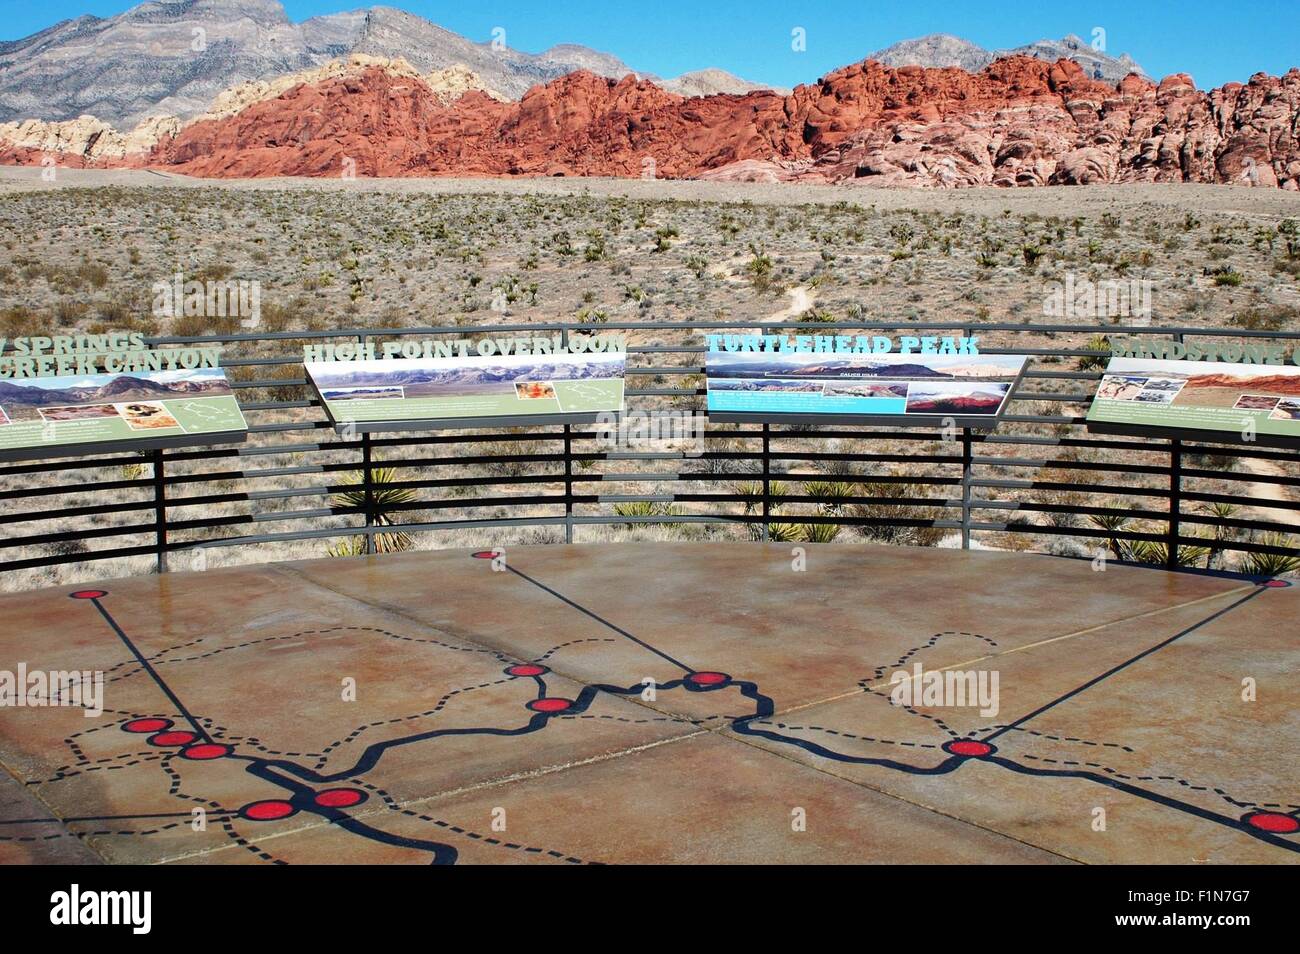 Red Rock Canyon National Conservation Area Visitor Center interpretativen Aussenanlage 2. September 2015 in der Nähe von Las Vegas, Nevada. Stockfoto